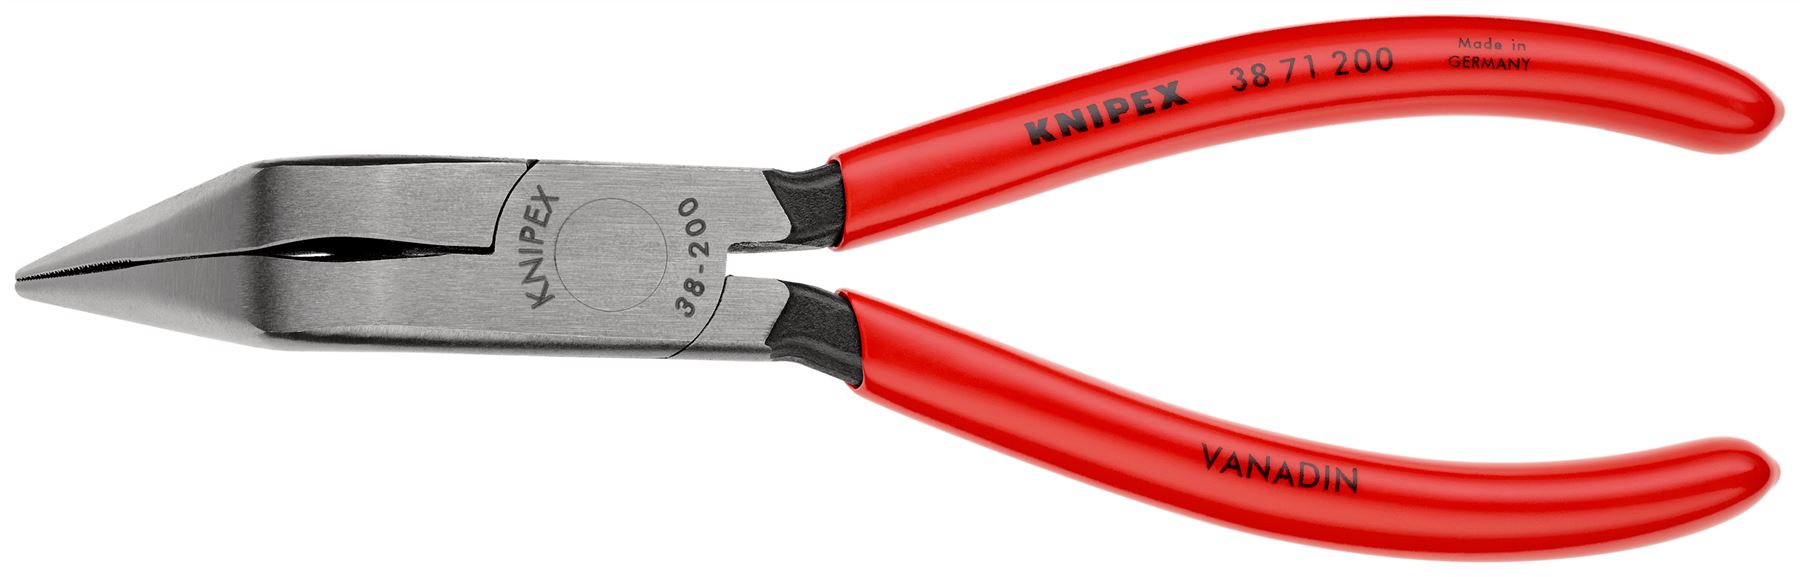 Knipex Mechanics Pliers 200mm 70 Degree Angled Half Round Jaws 38 71 200